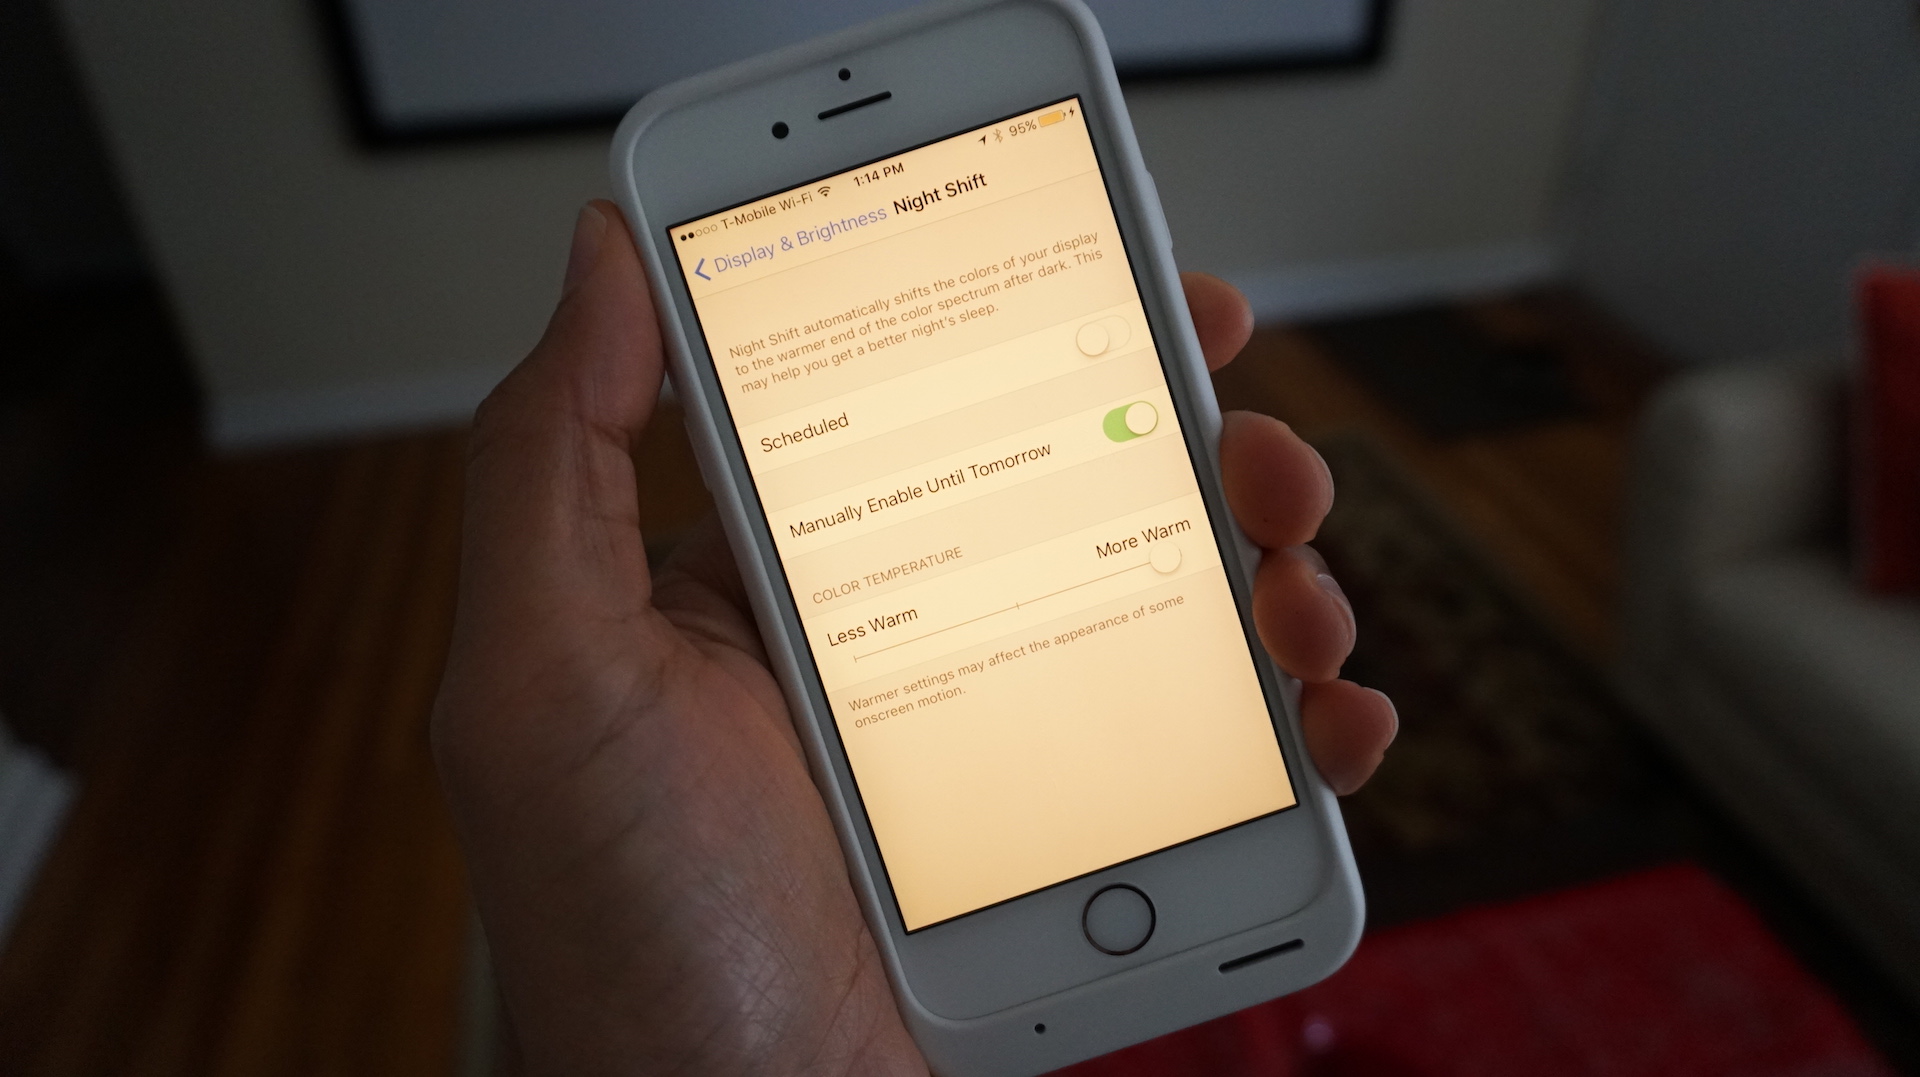 Low Power Mode Night Shift iOS 9.3.2 beta 2